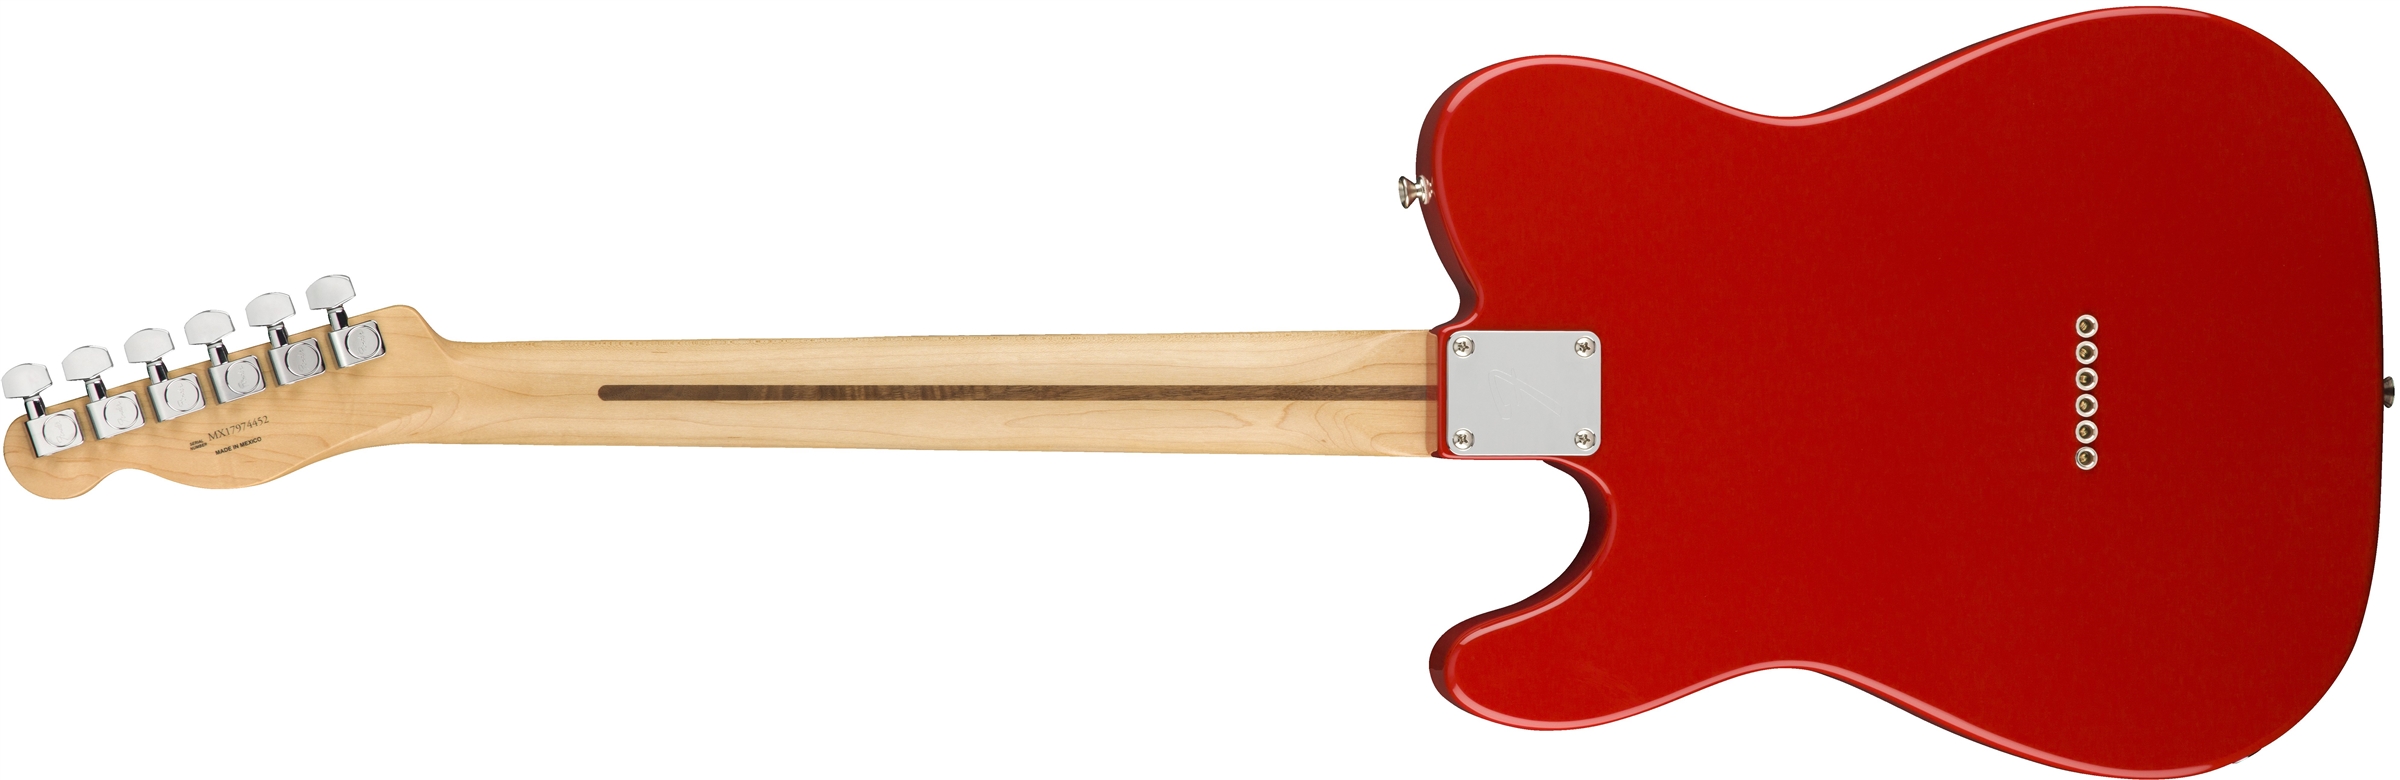 Fender Tele Player Mex Ss Pf - Sonic Red - Guitarra eléctrica con forma de tel - Variation 1